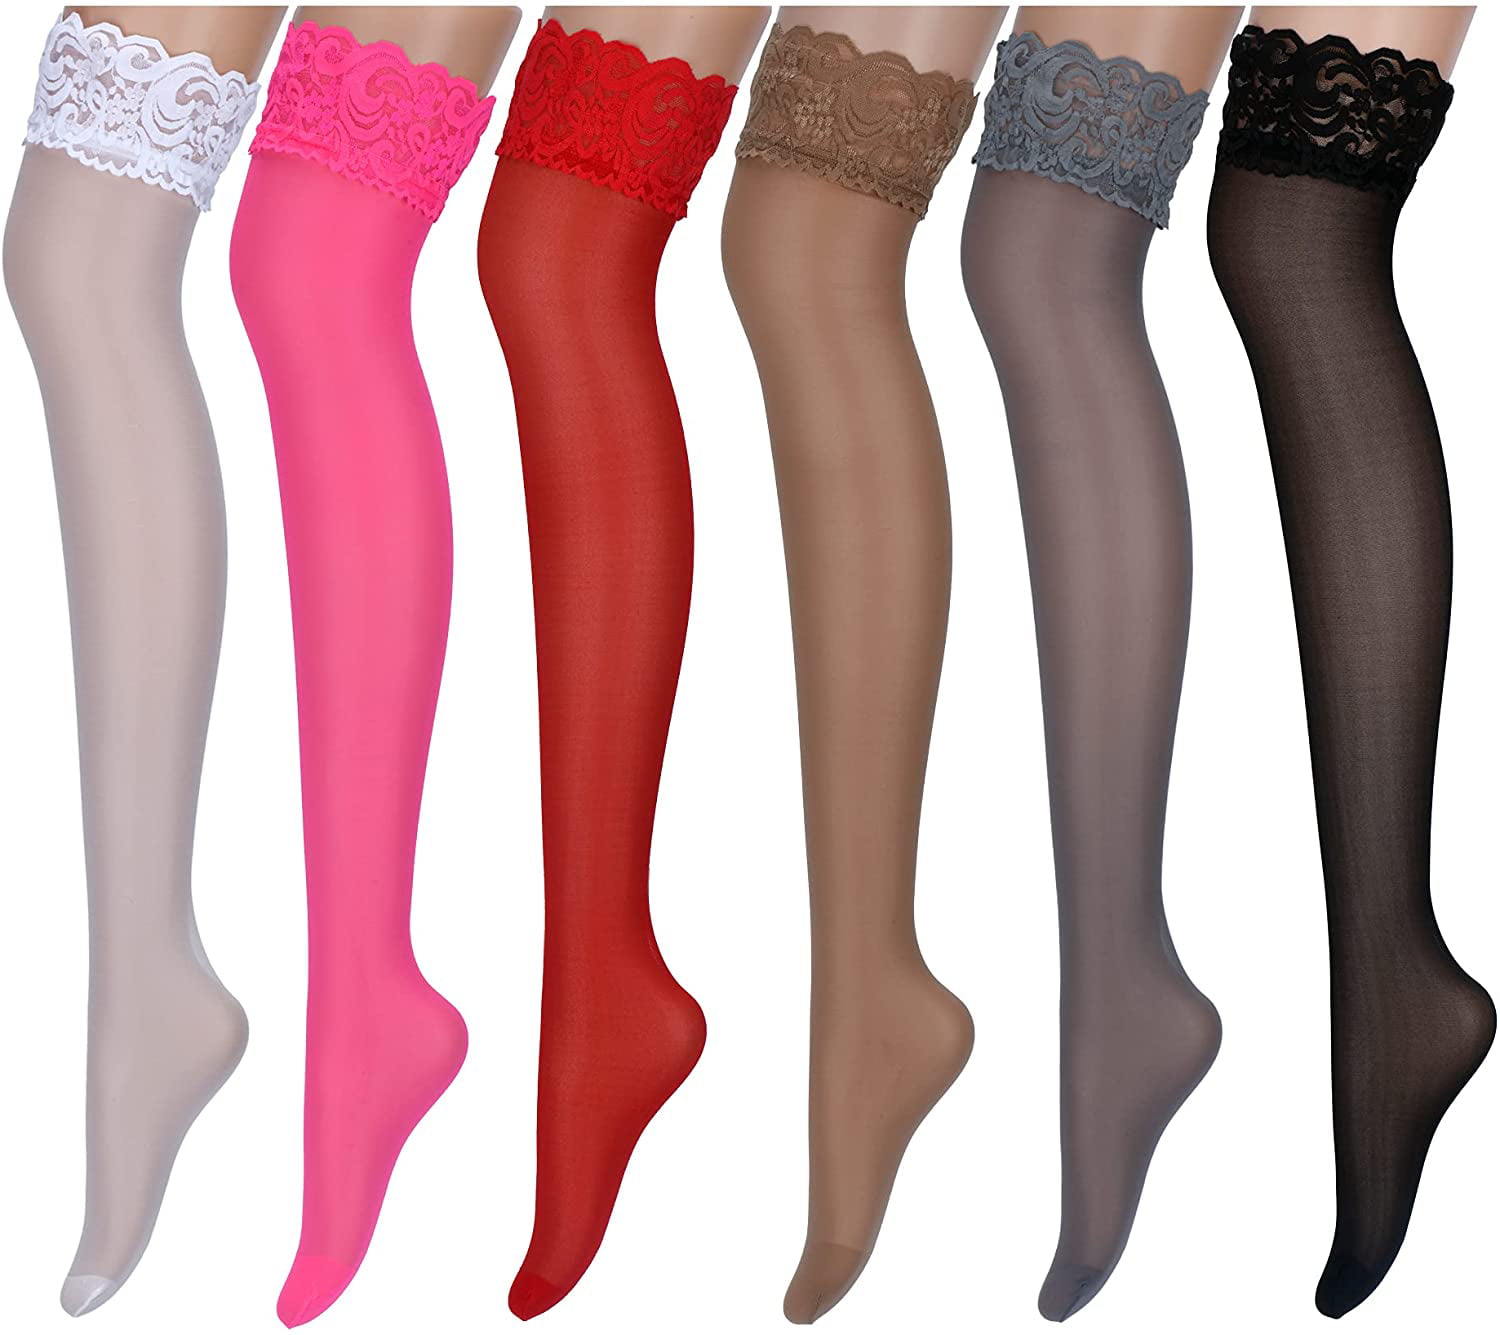 Lidogirl Lace Top Thigh High Stockings - Walmart.com